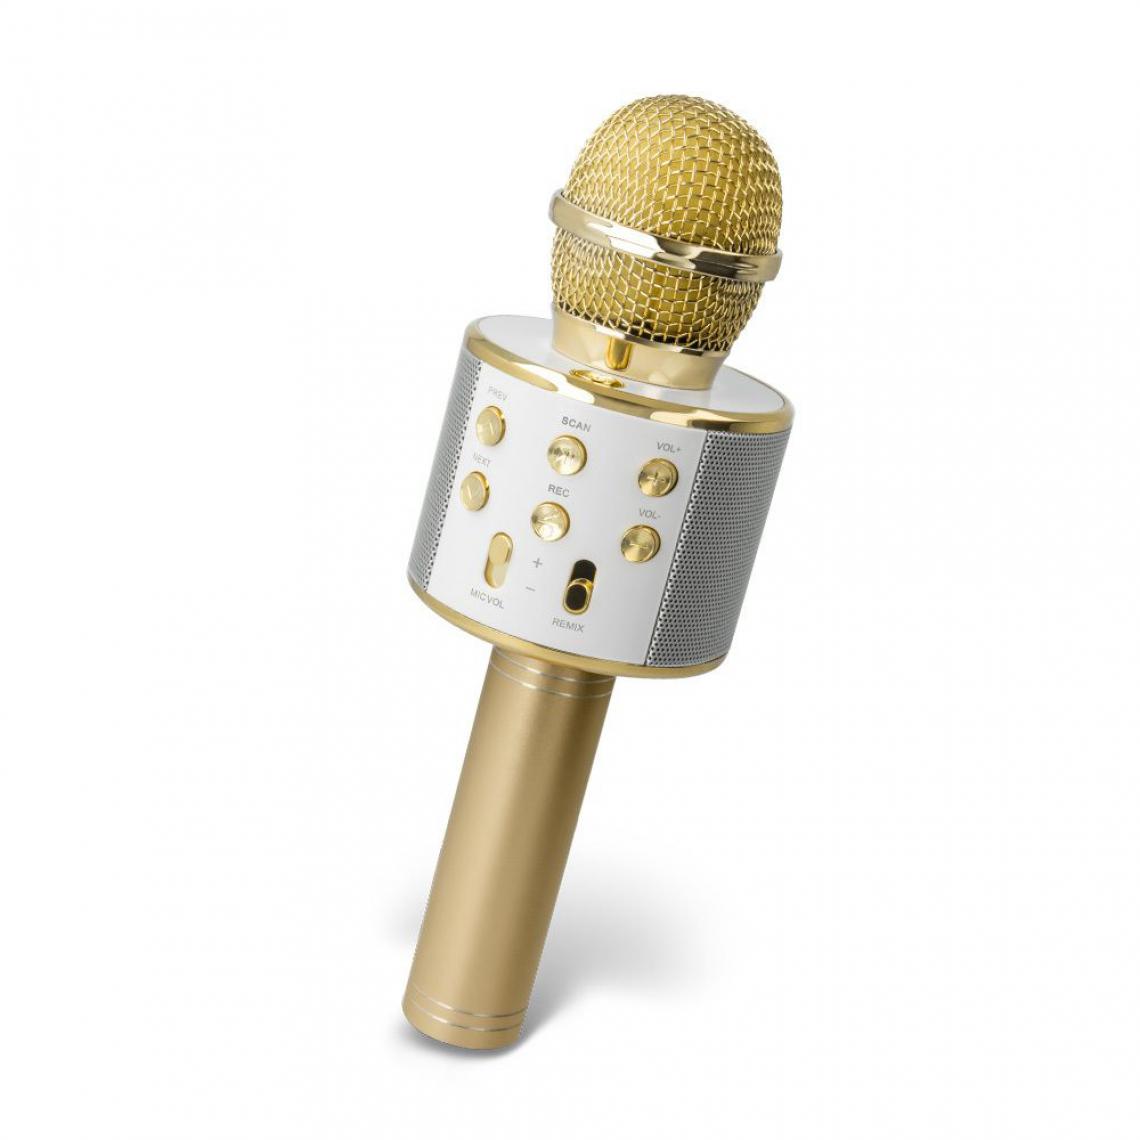 Ozzzo - Microphone Karaoke bluetooth haut parleur ozzzo Gold Or pour Elephone A6 mini - Autres accessoires smartphone